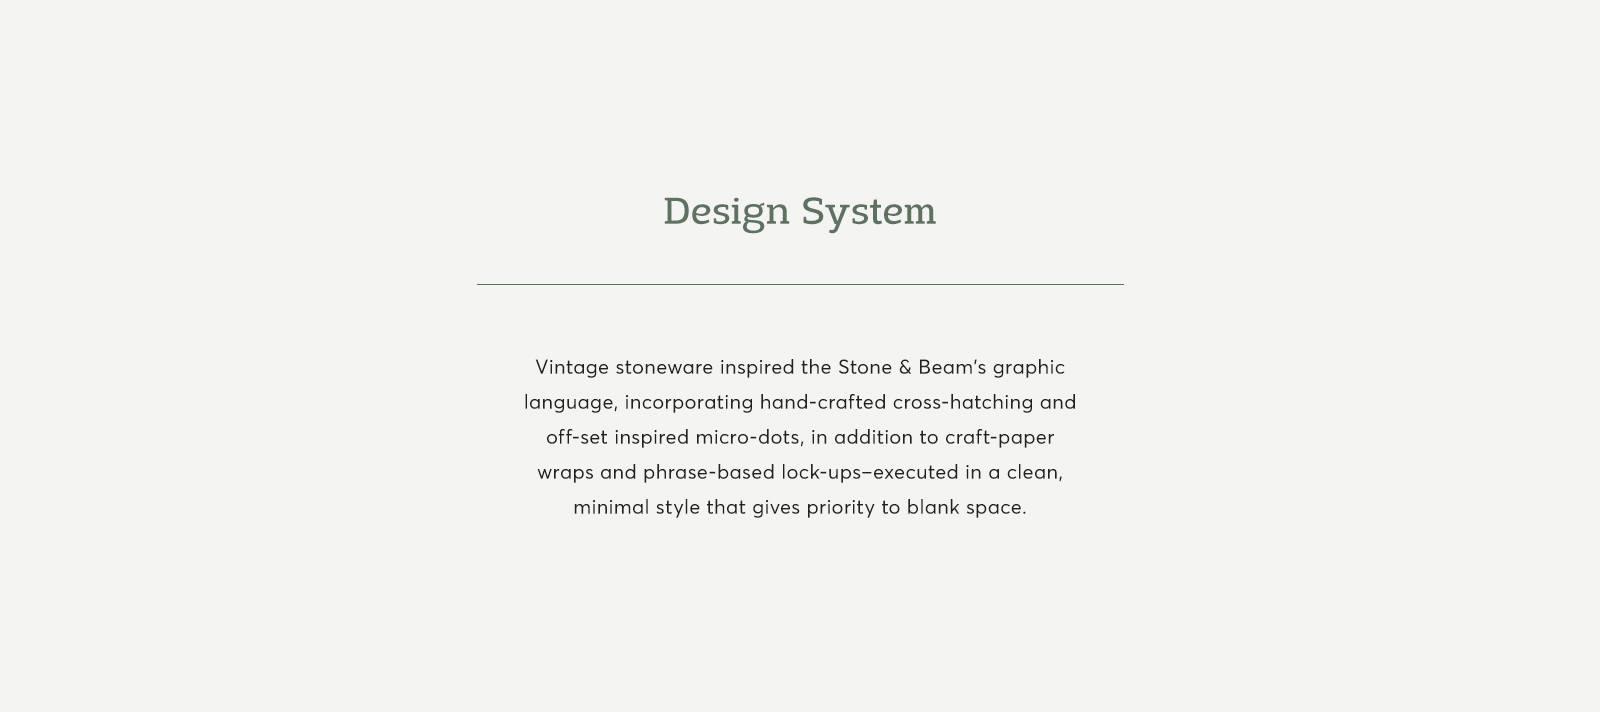 22StoneandBeam—DesignSystem